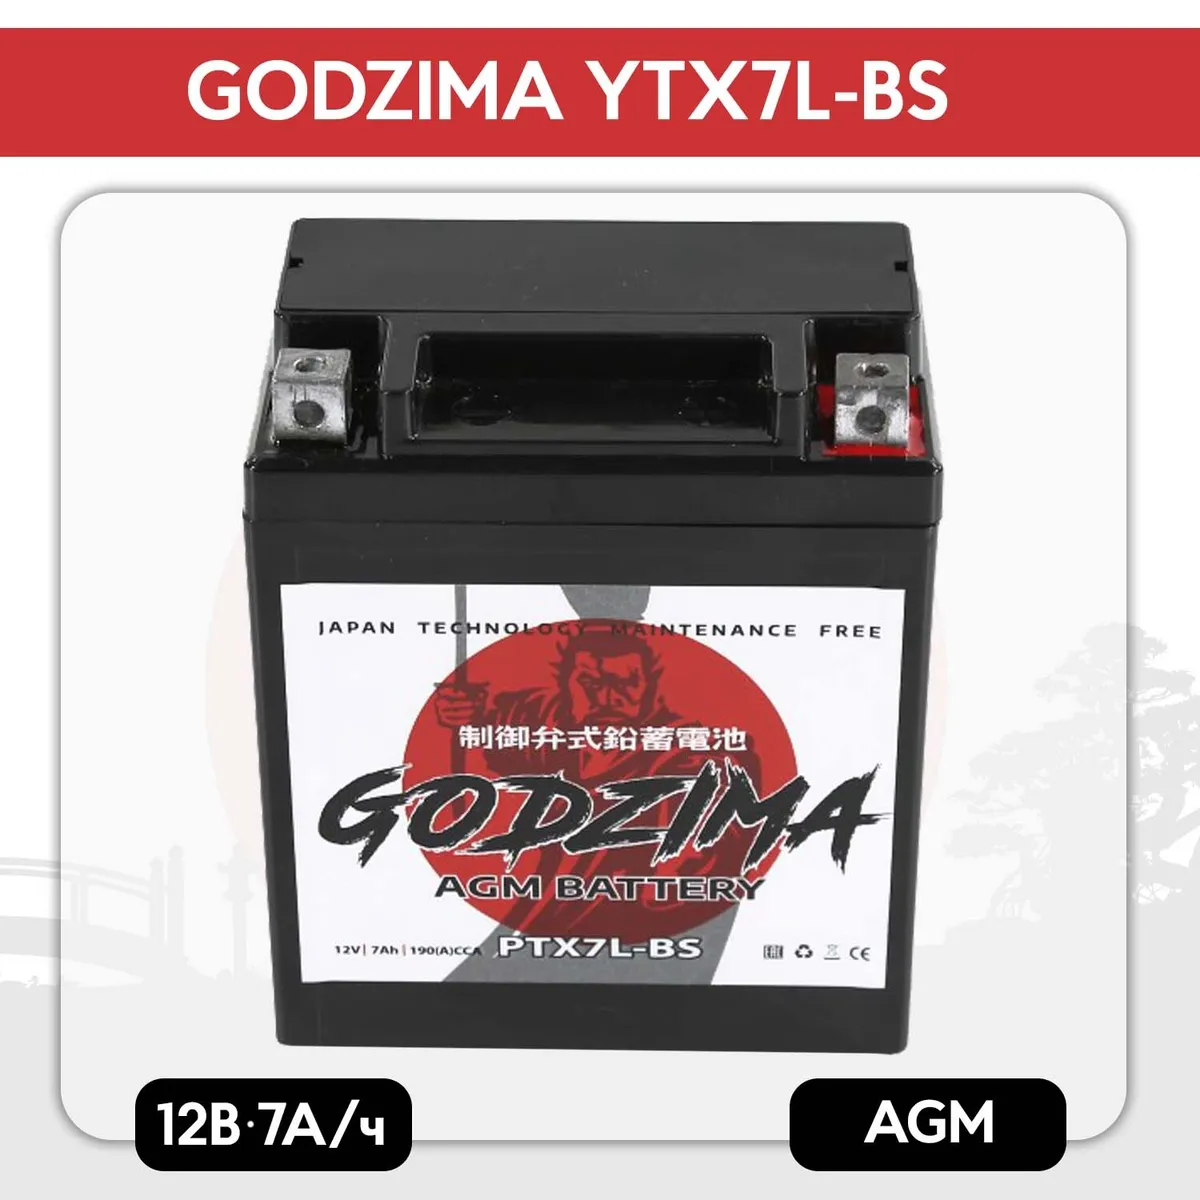 Мото аккумулятор Godzima GTX7L-BS (YTX7L-BS) стартерный для мотоцикла, квадроцикла, скутер